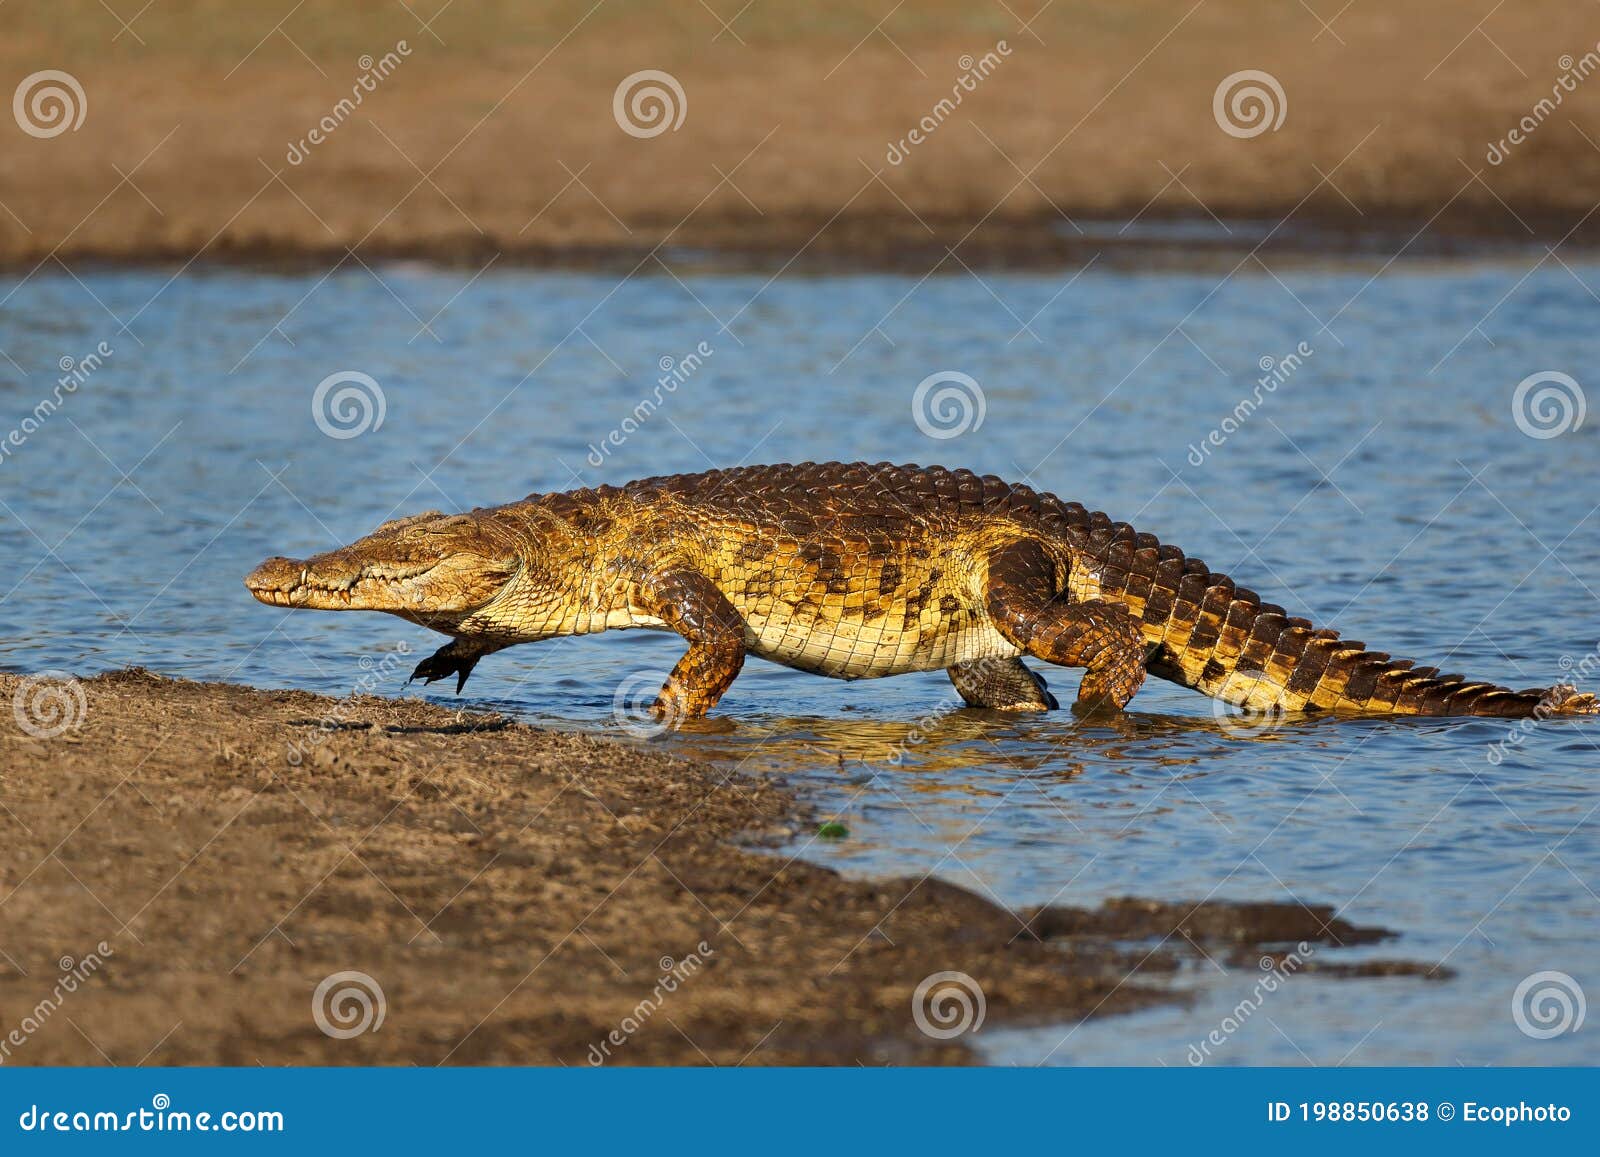 nile crocodile emerging from water